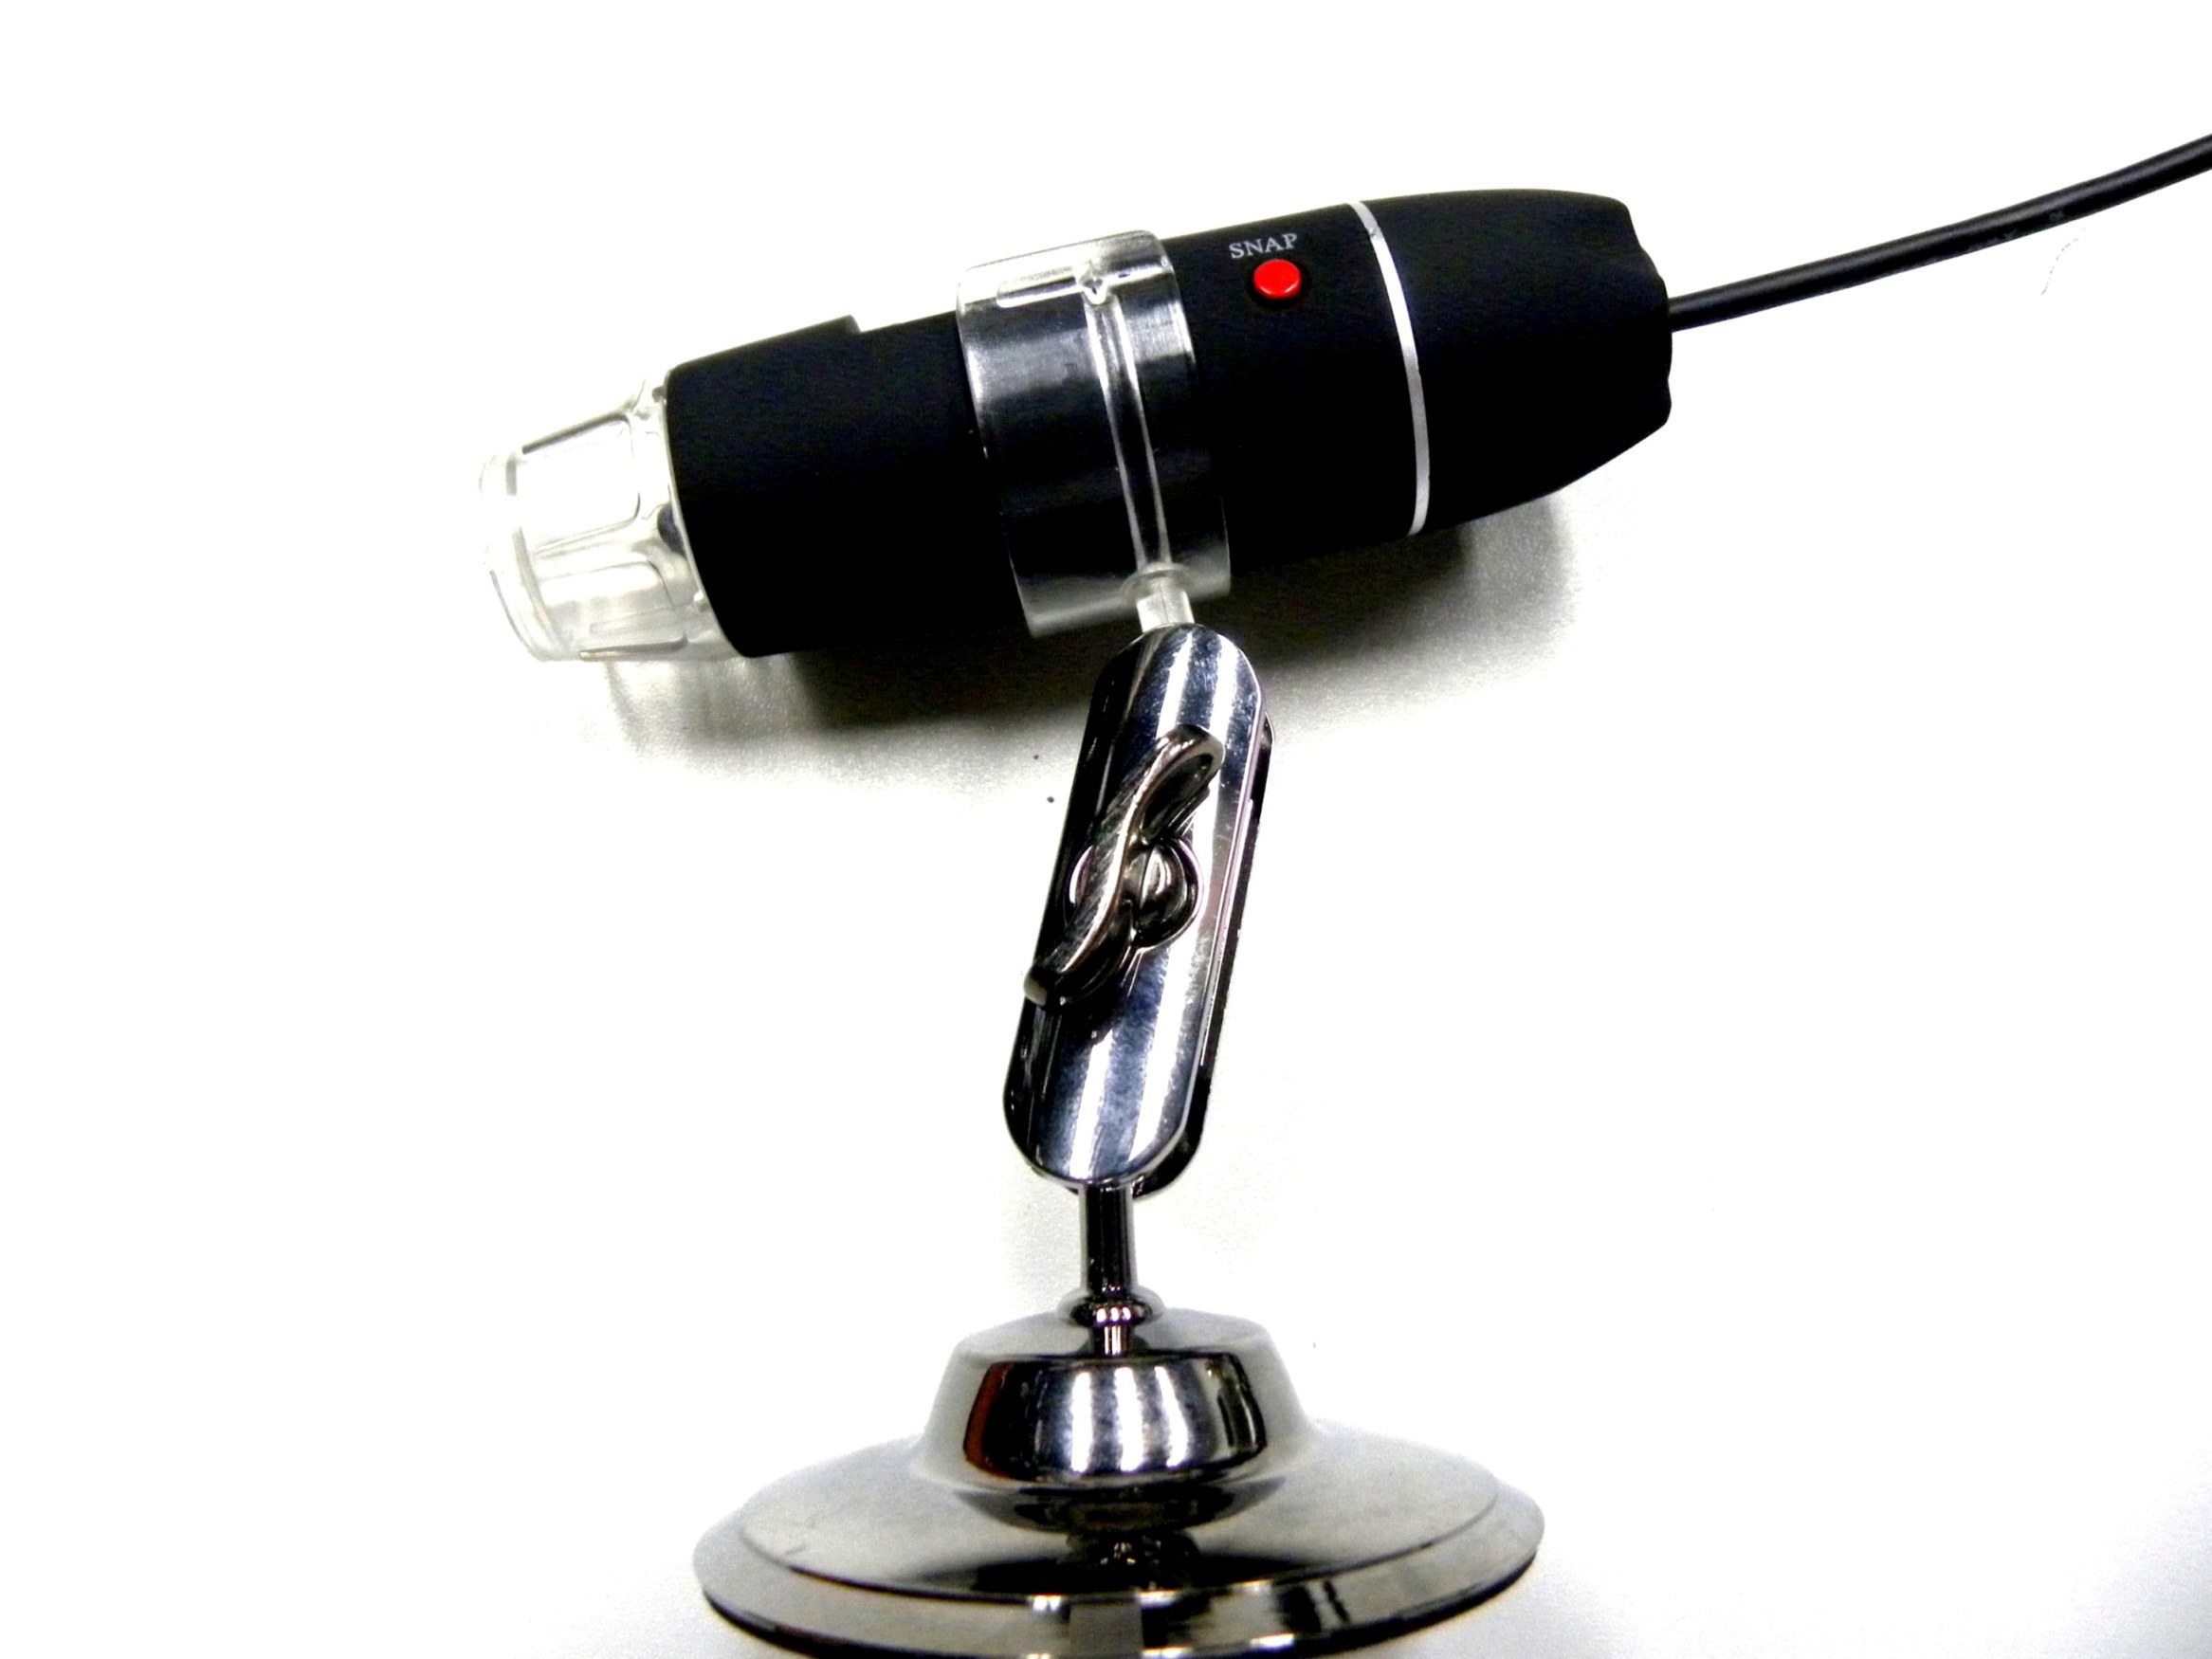 DMU-U400x digitale USB microscoop, microscoop camera